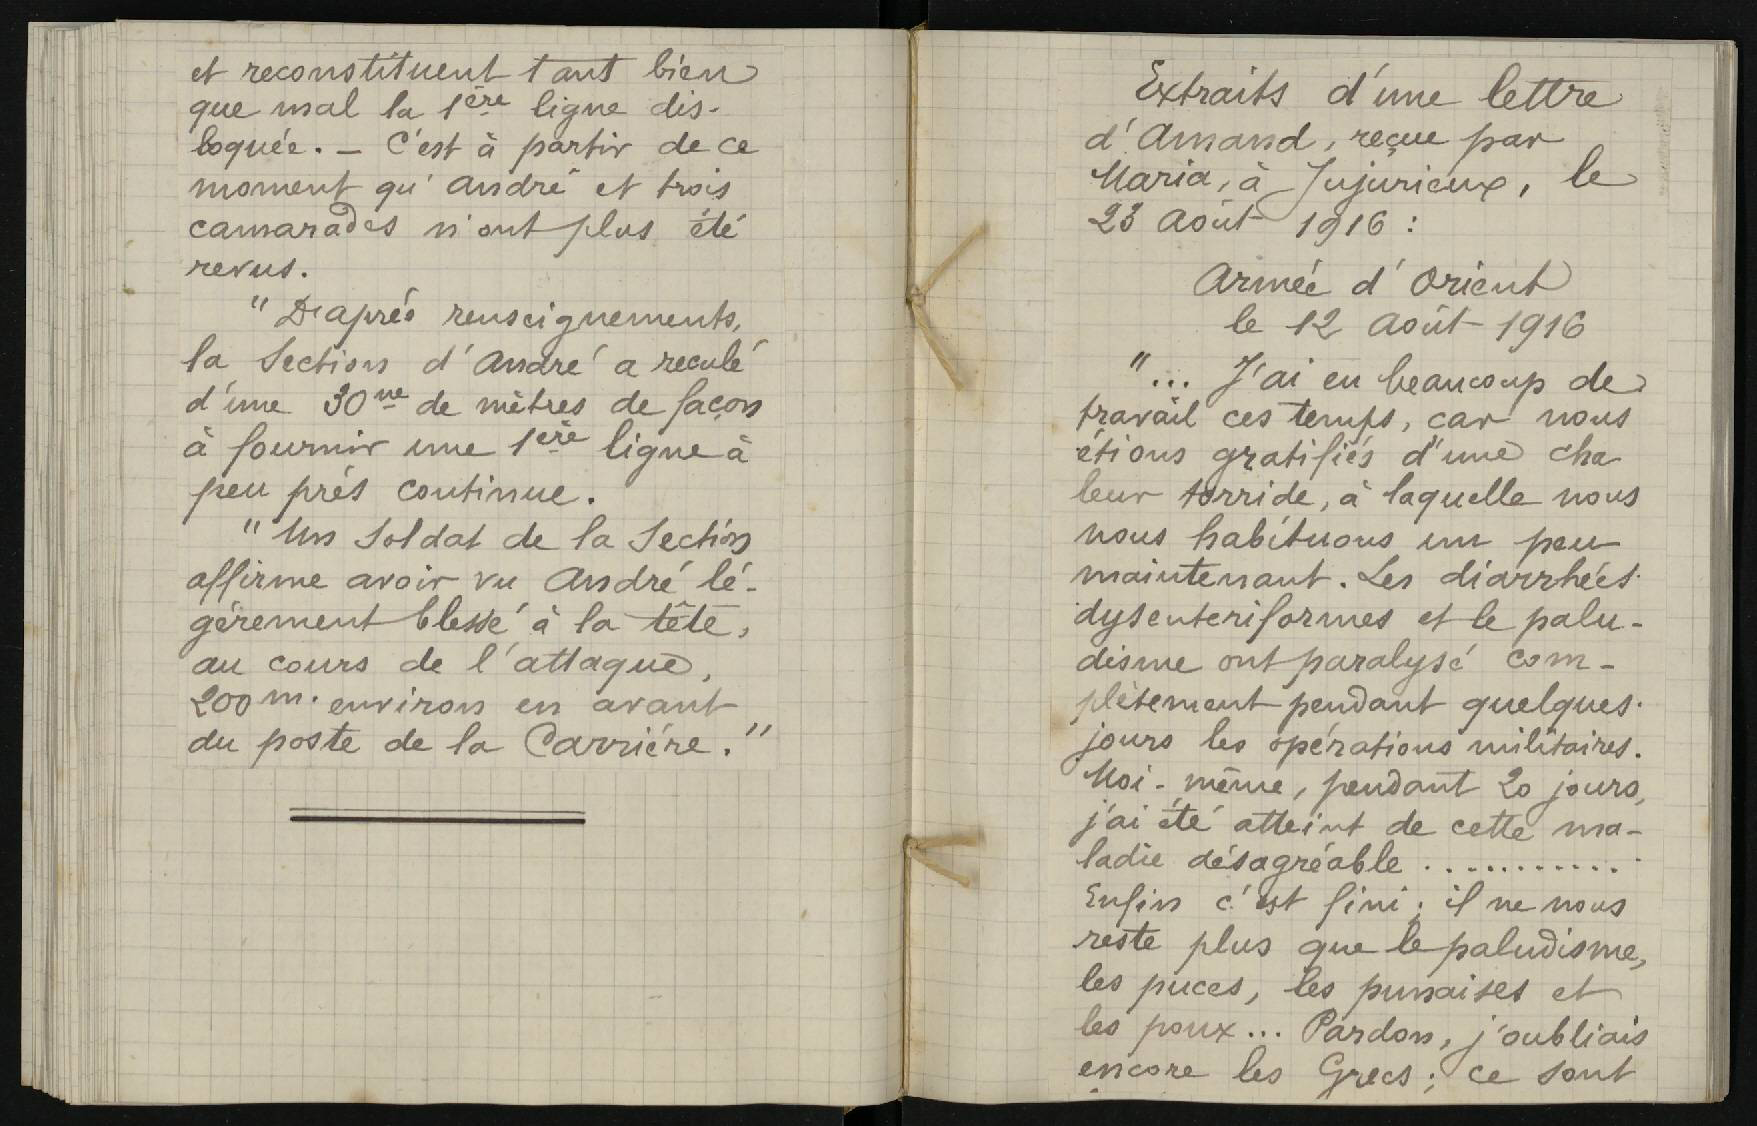 Journal de Barthélémy Mermet, 23 août 1916 (Lettre d'Armand à Maria du 12 août 1916) - 253ii/123